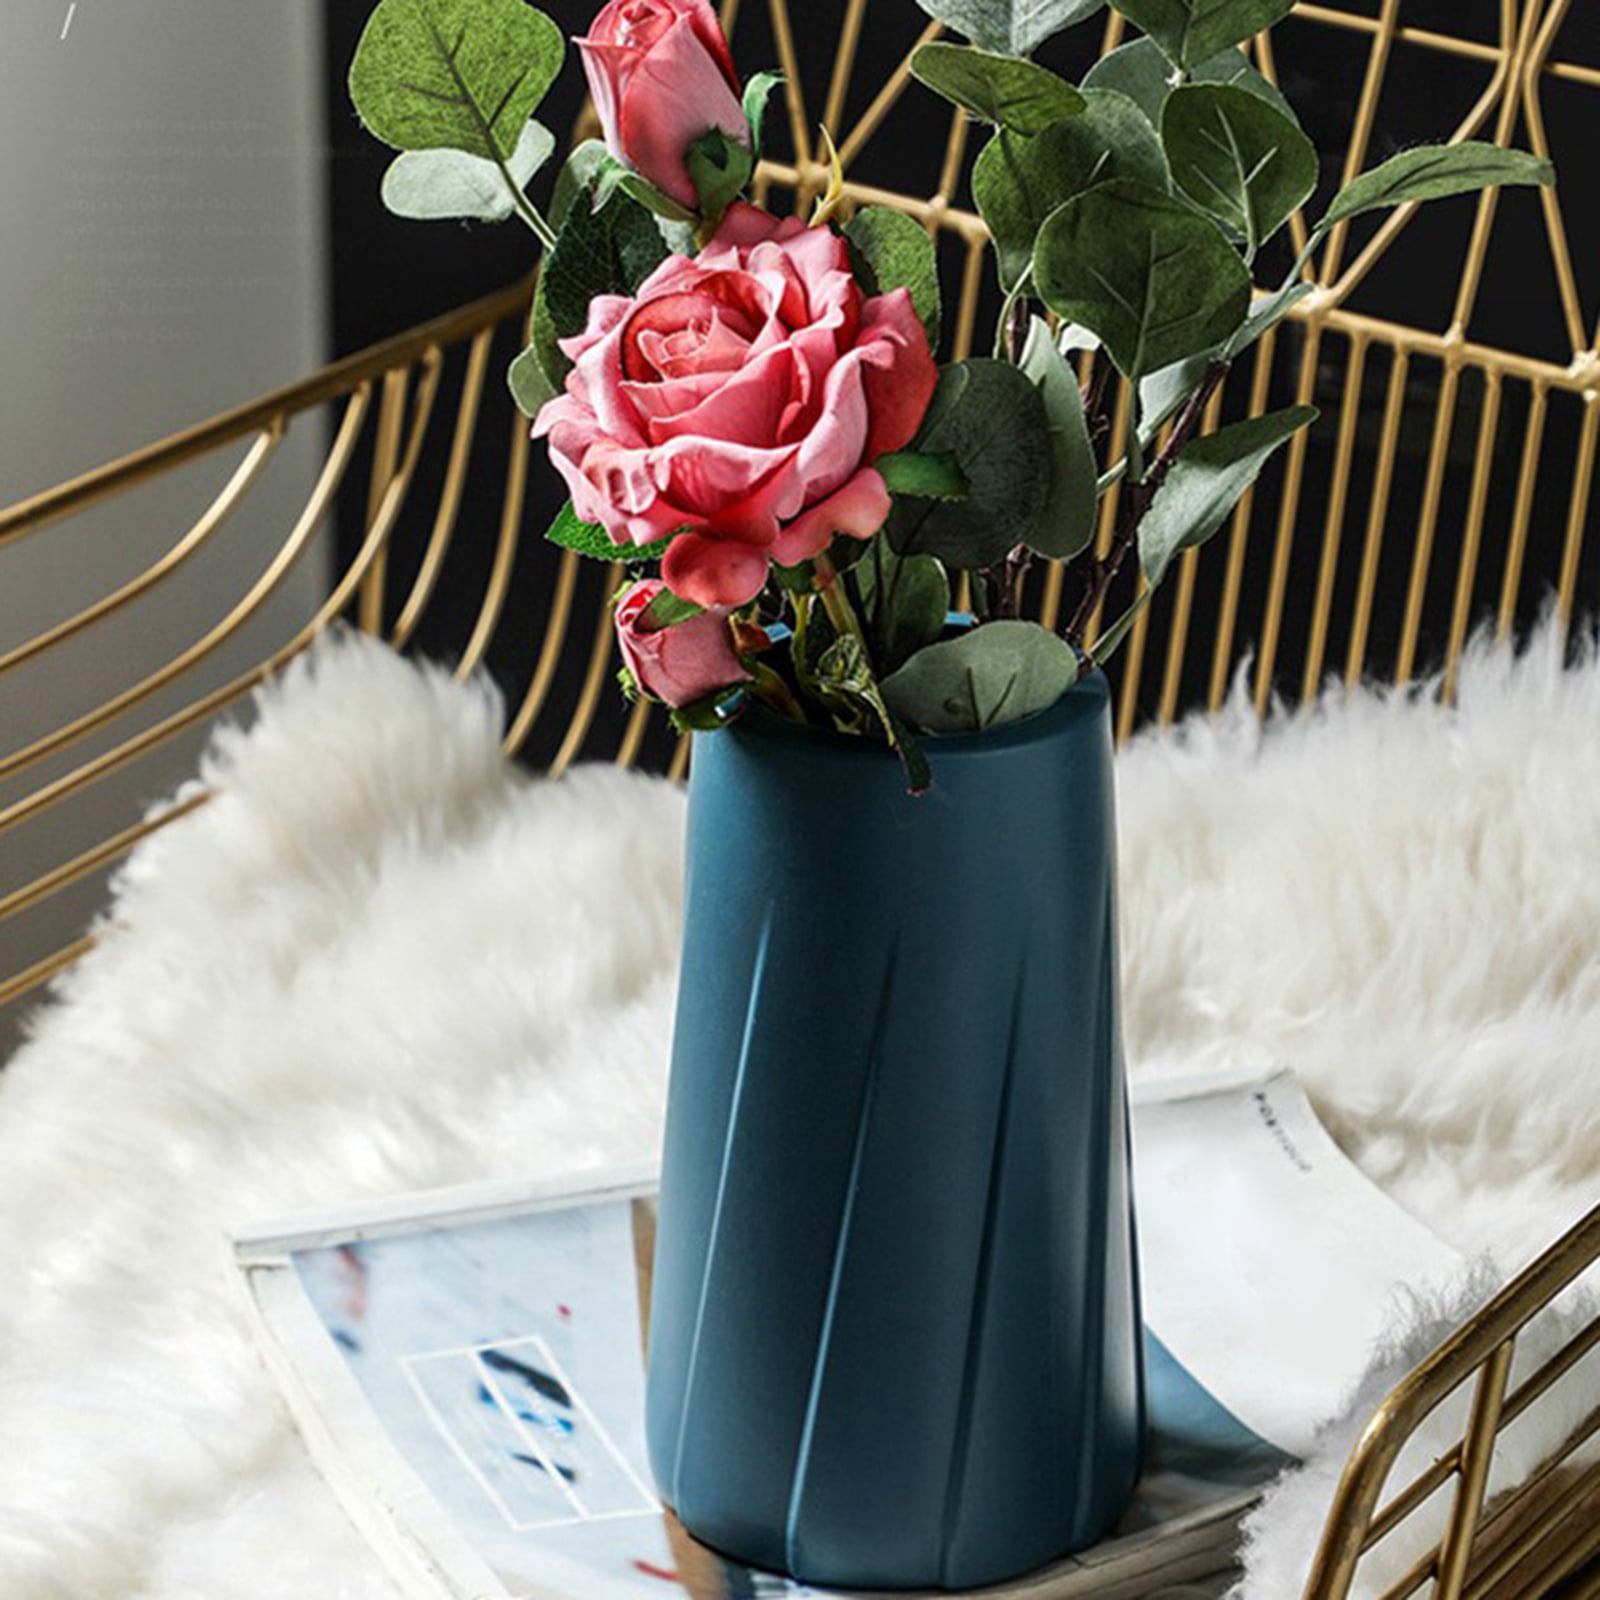 Details about   Flower Vase Decoration Plastic Flower Pot Houswarming Gift 